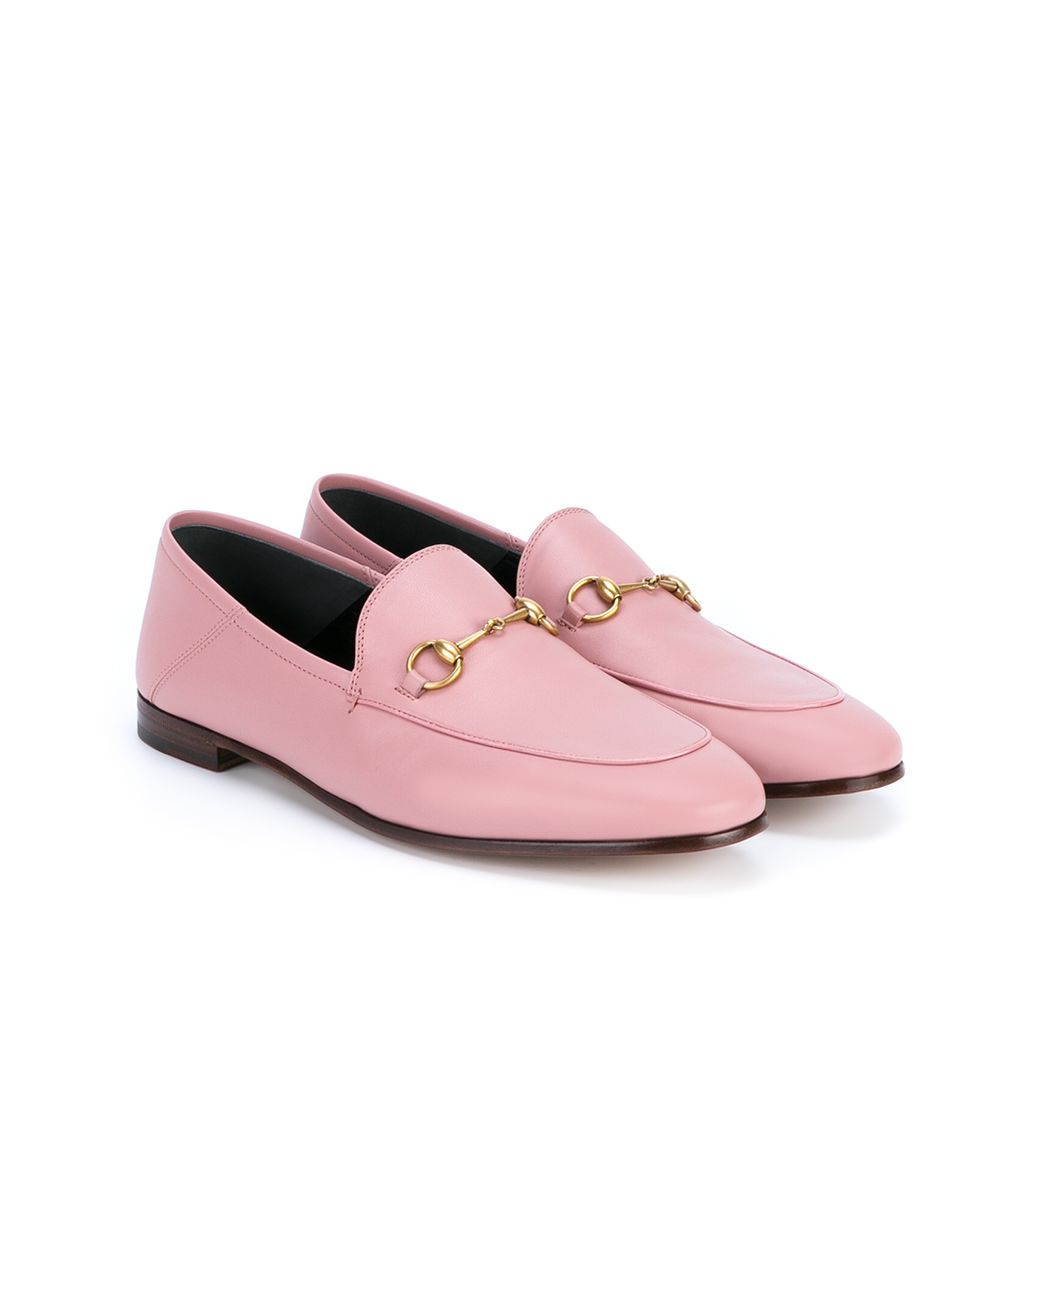 Gucci Jordaan Horsebit Loafers in Pink | Lyst